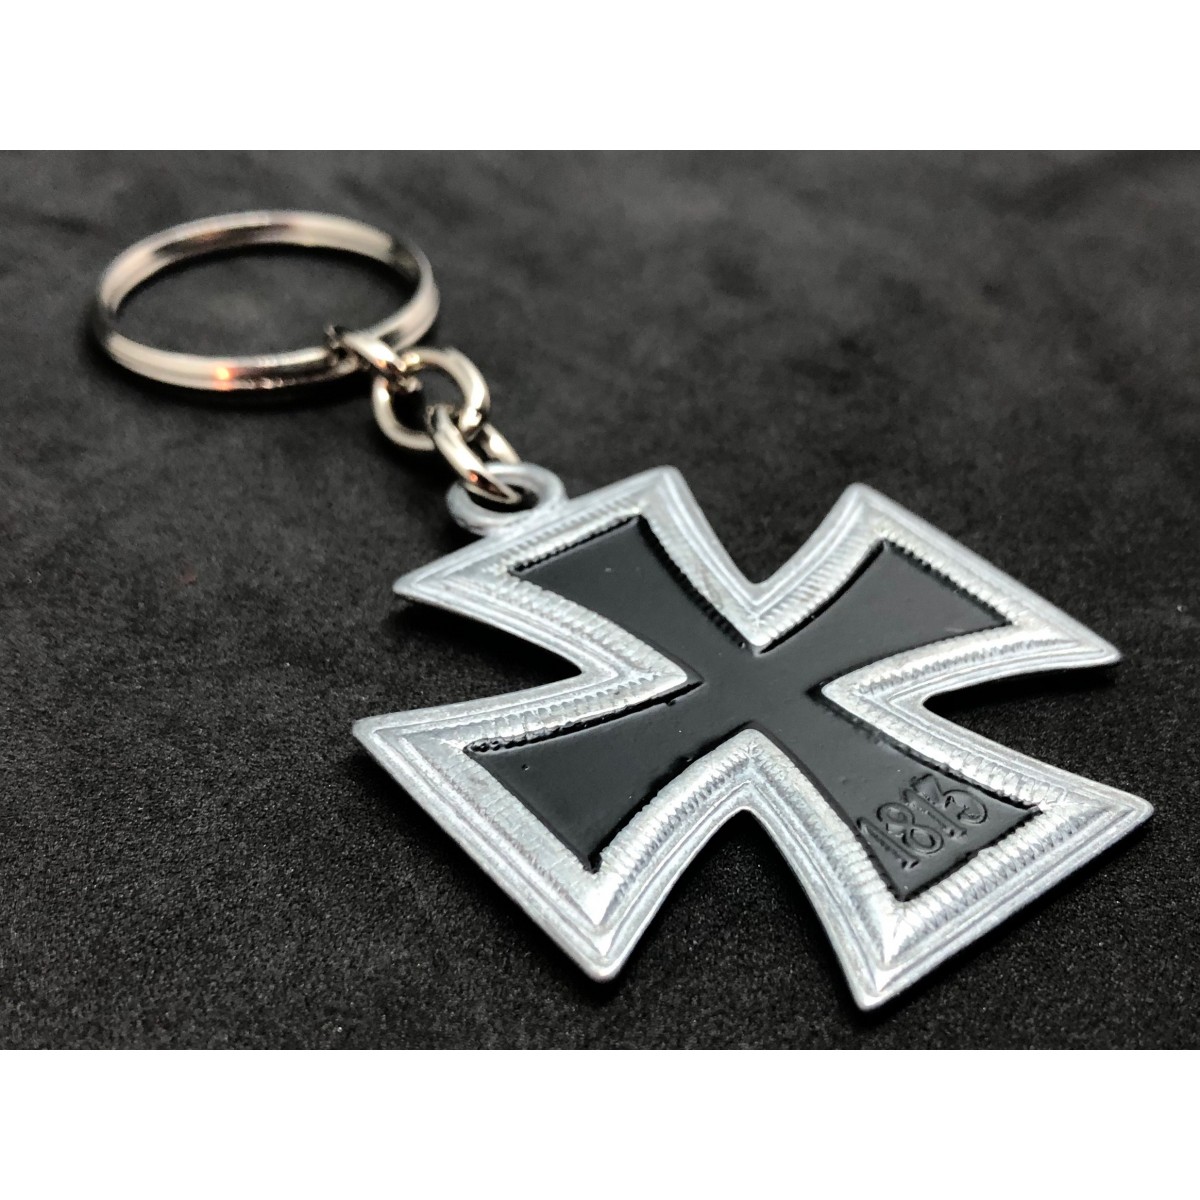 Schlüsselring schlüssel gestickt aufnäher flicken flagge kreuz baske euskadi